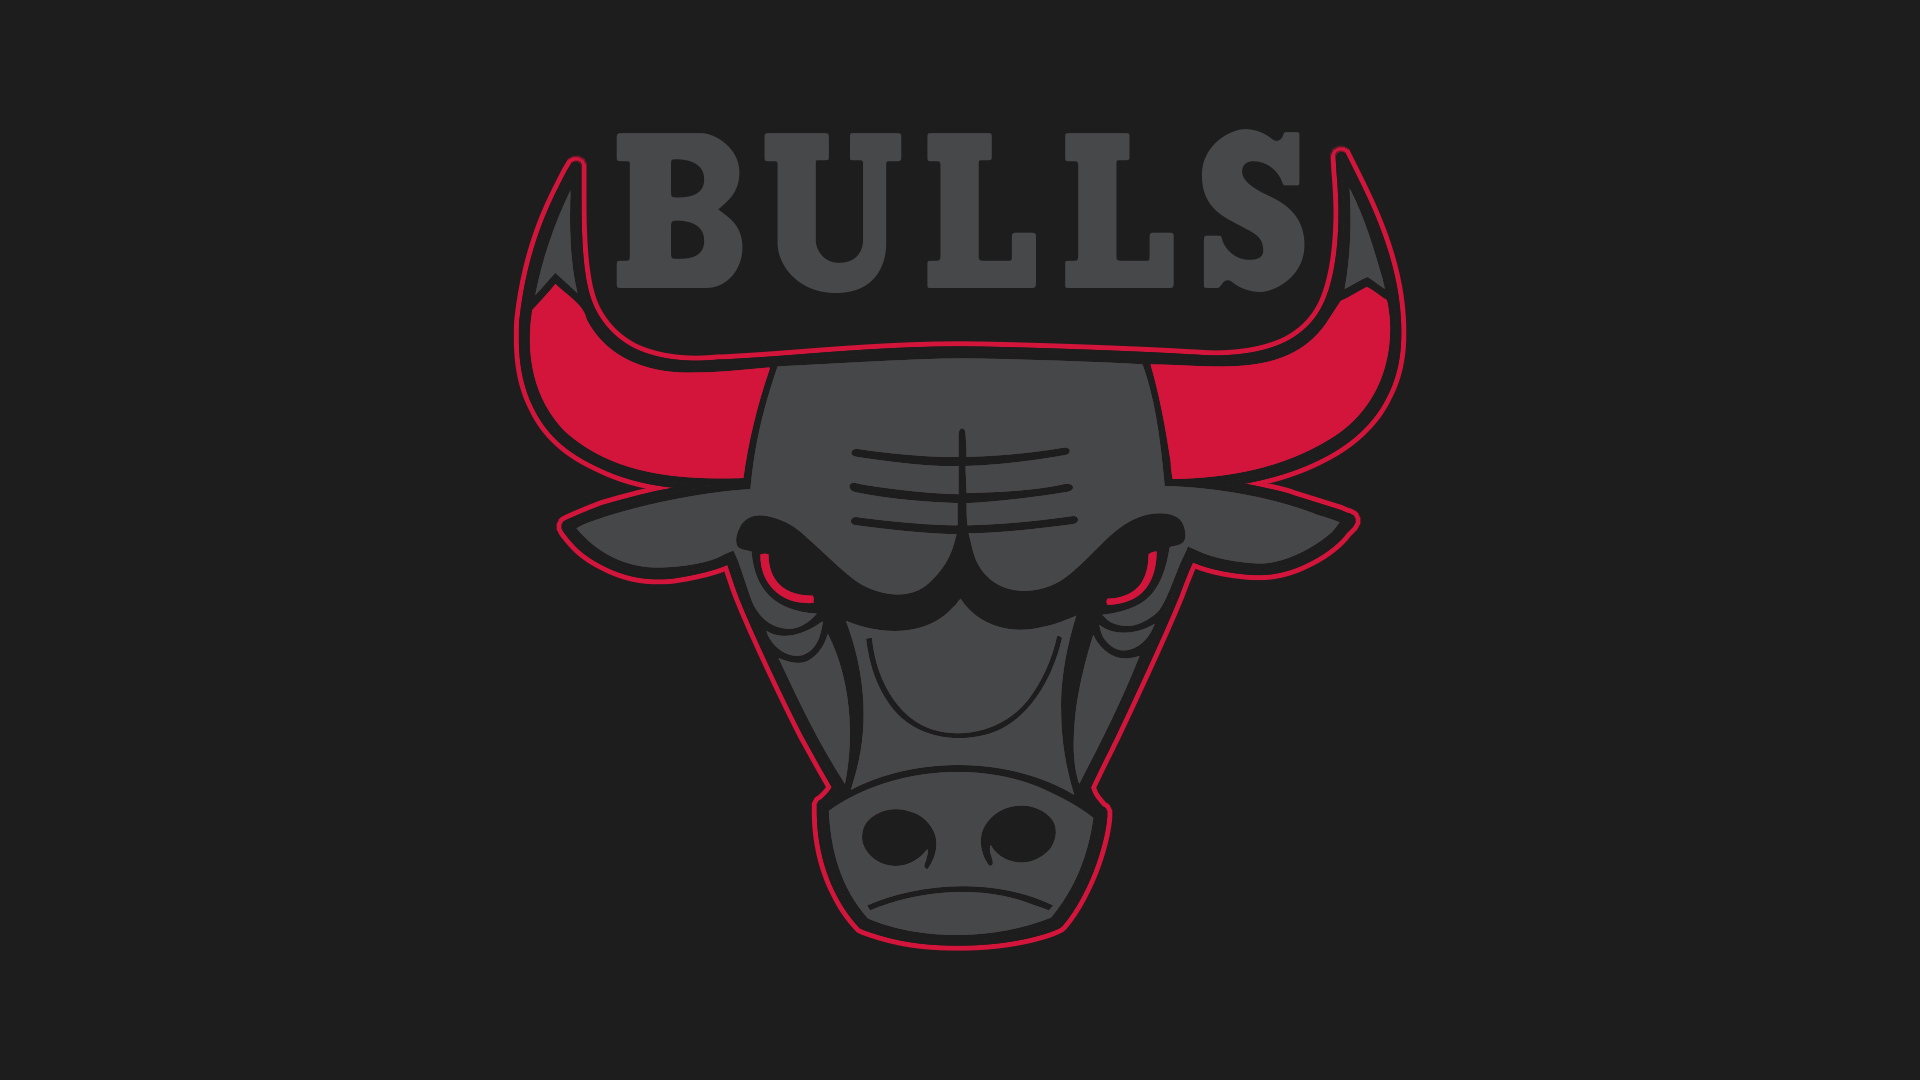 chicago bulls logo black wallpaper hd for desktop widescreen wallpaper